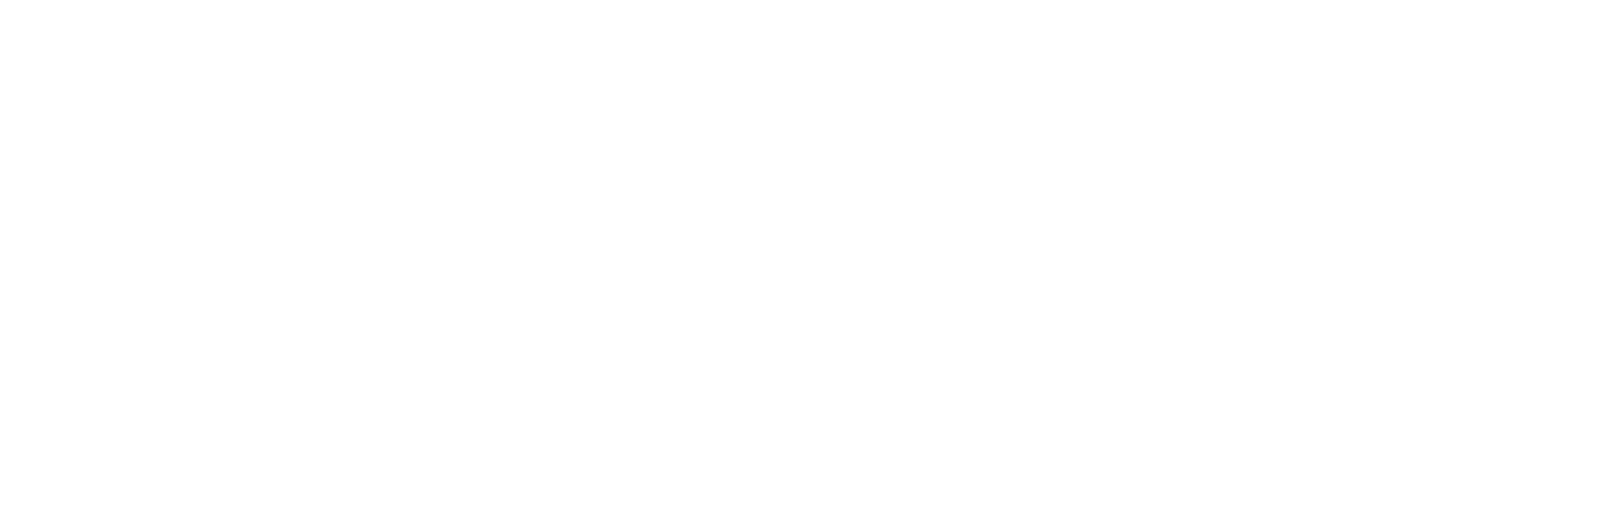 JPMorgan Asset Management Logo groß für dunkle Hintergründe (transparentes PNG)